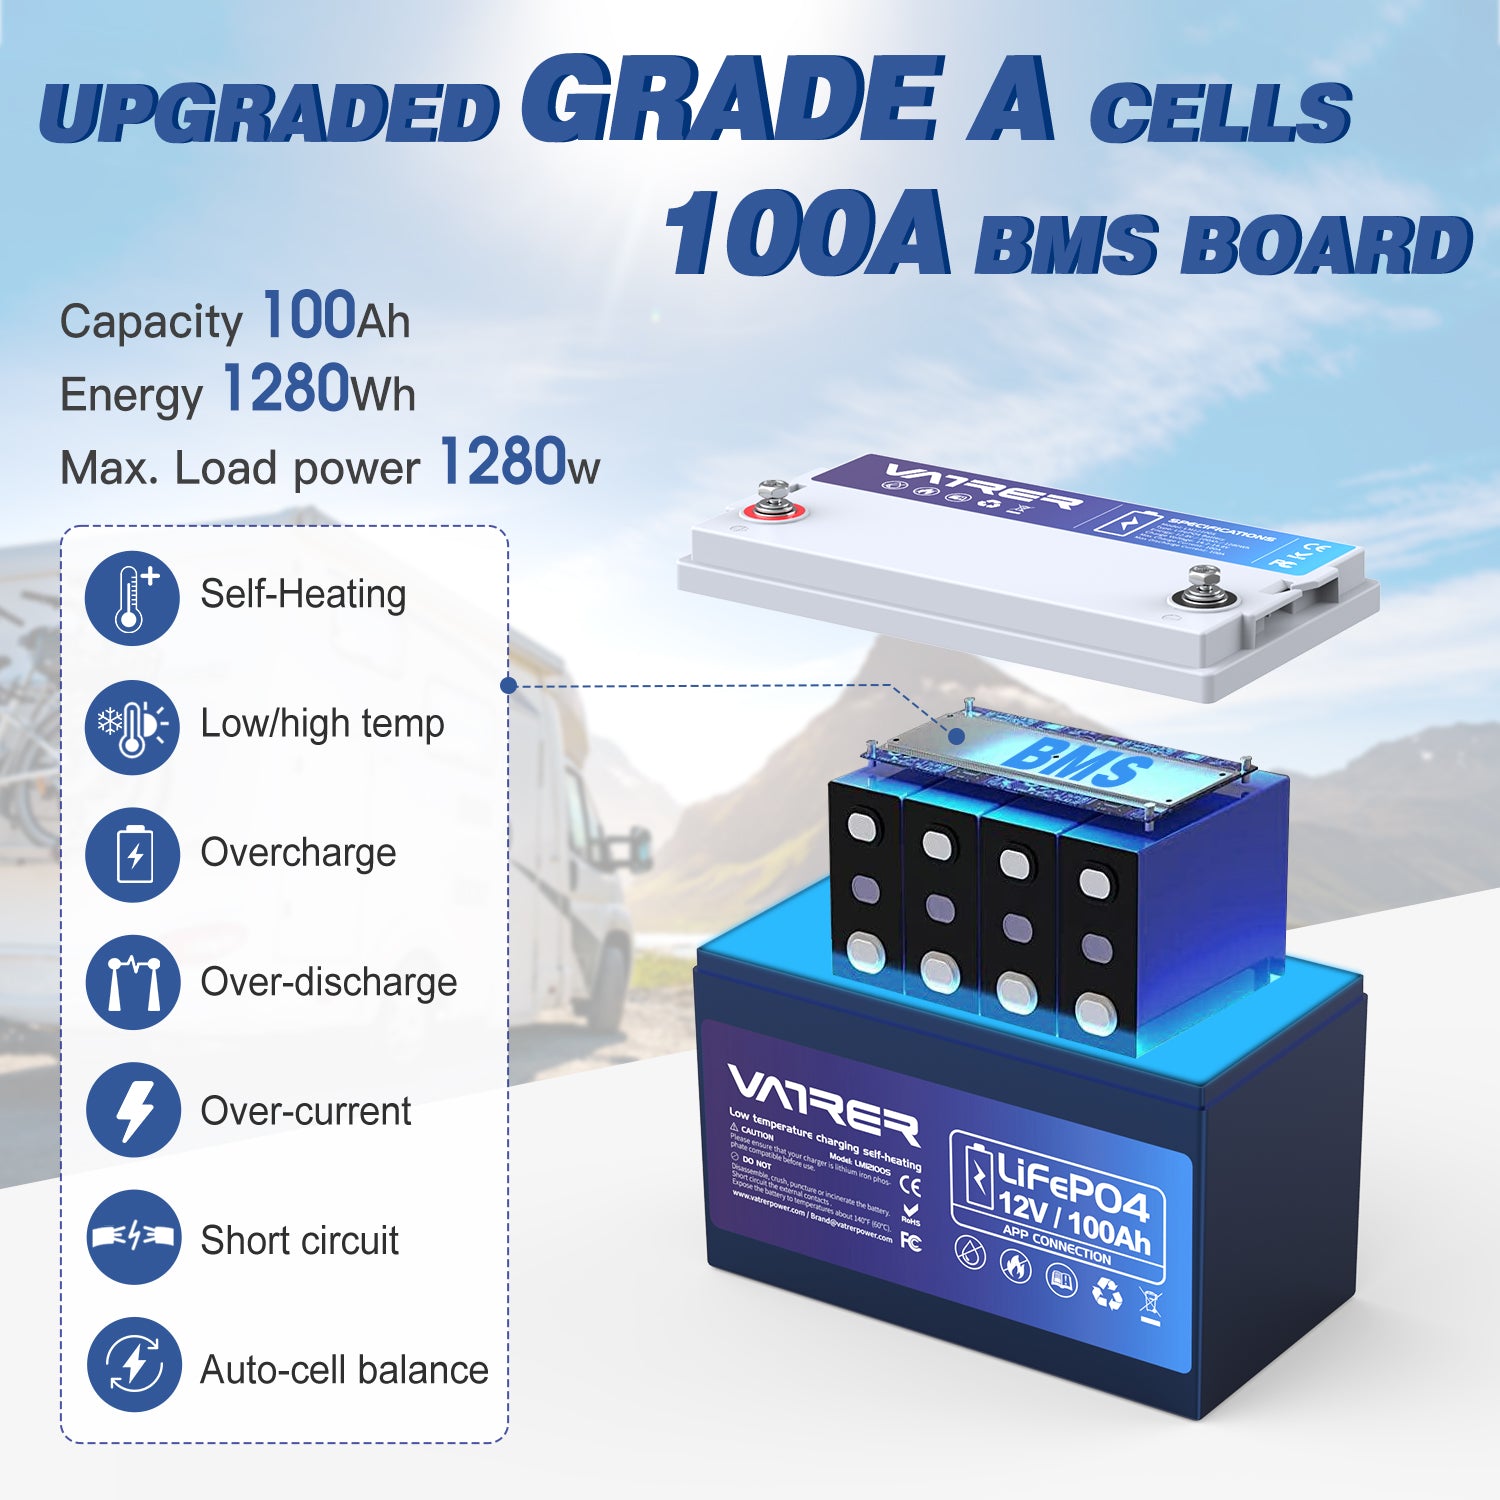 Vatrer 12V 100AH LiFePO4 Lithium Battery with APP Monitoring &  Self-He-Vatrer